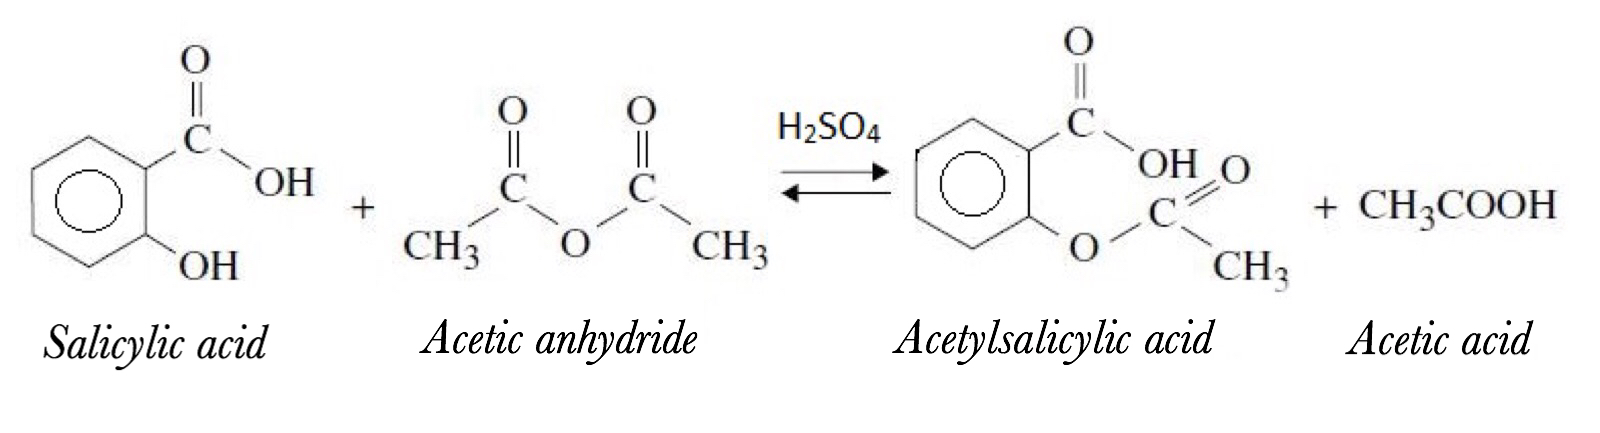 Сн3 cooh. Аспирин + NAOH. Ацетилсалициловая кислота NAOH. Лимонная кислота NAOH. Аспирин NAOH реакция.